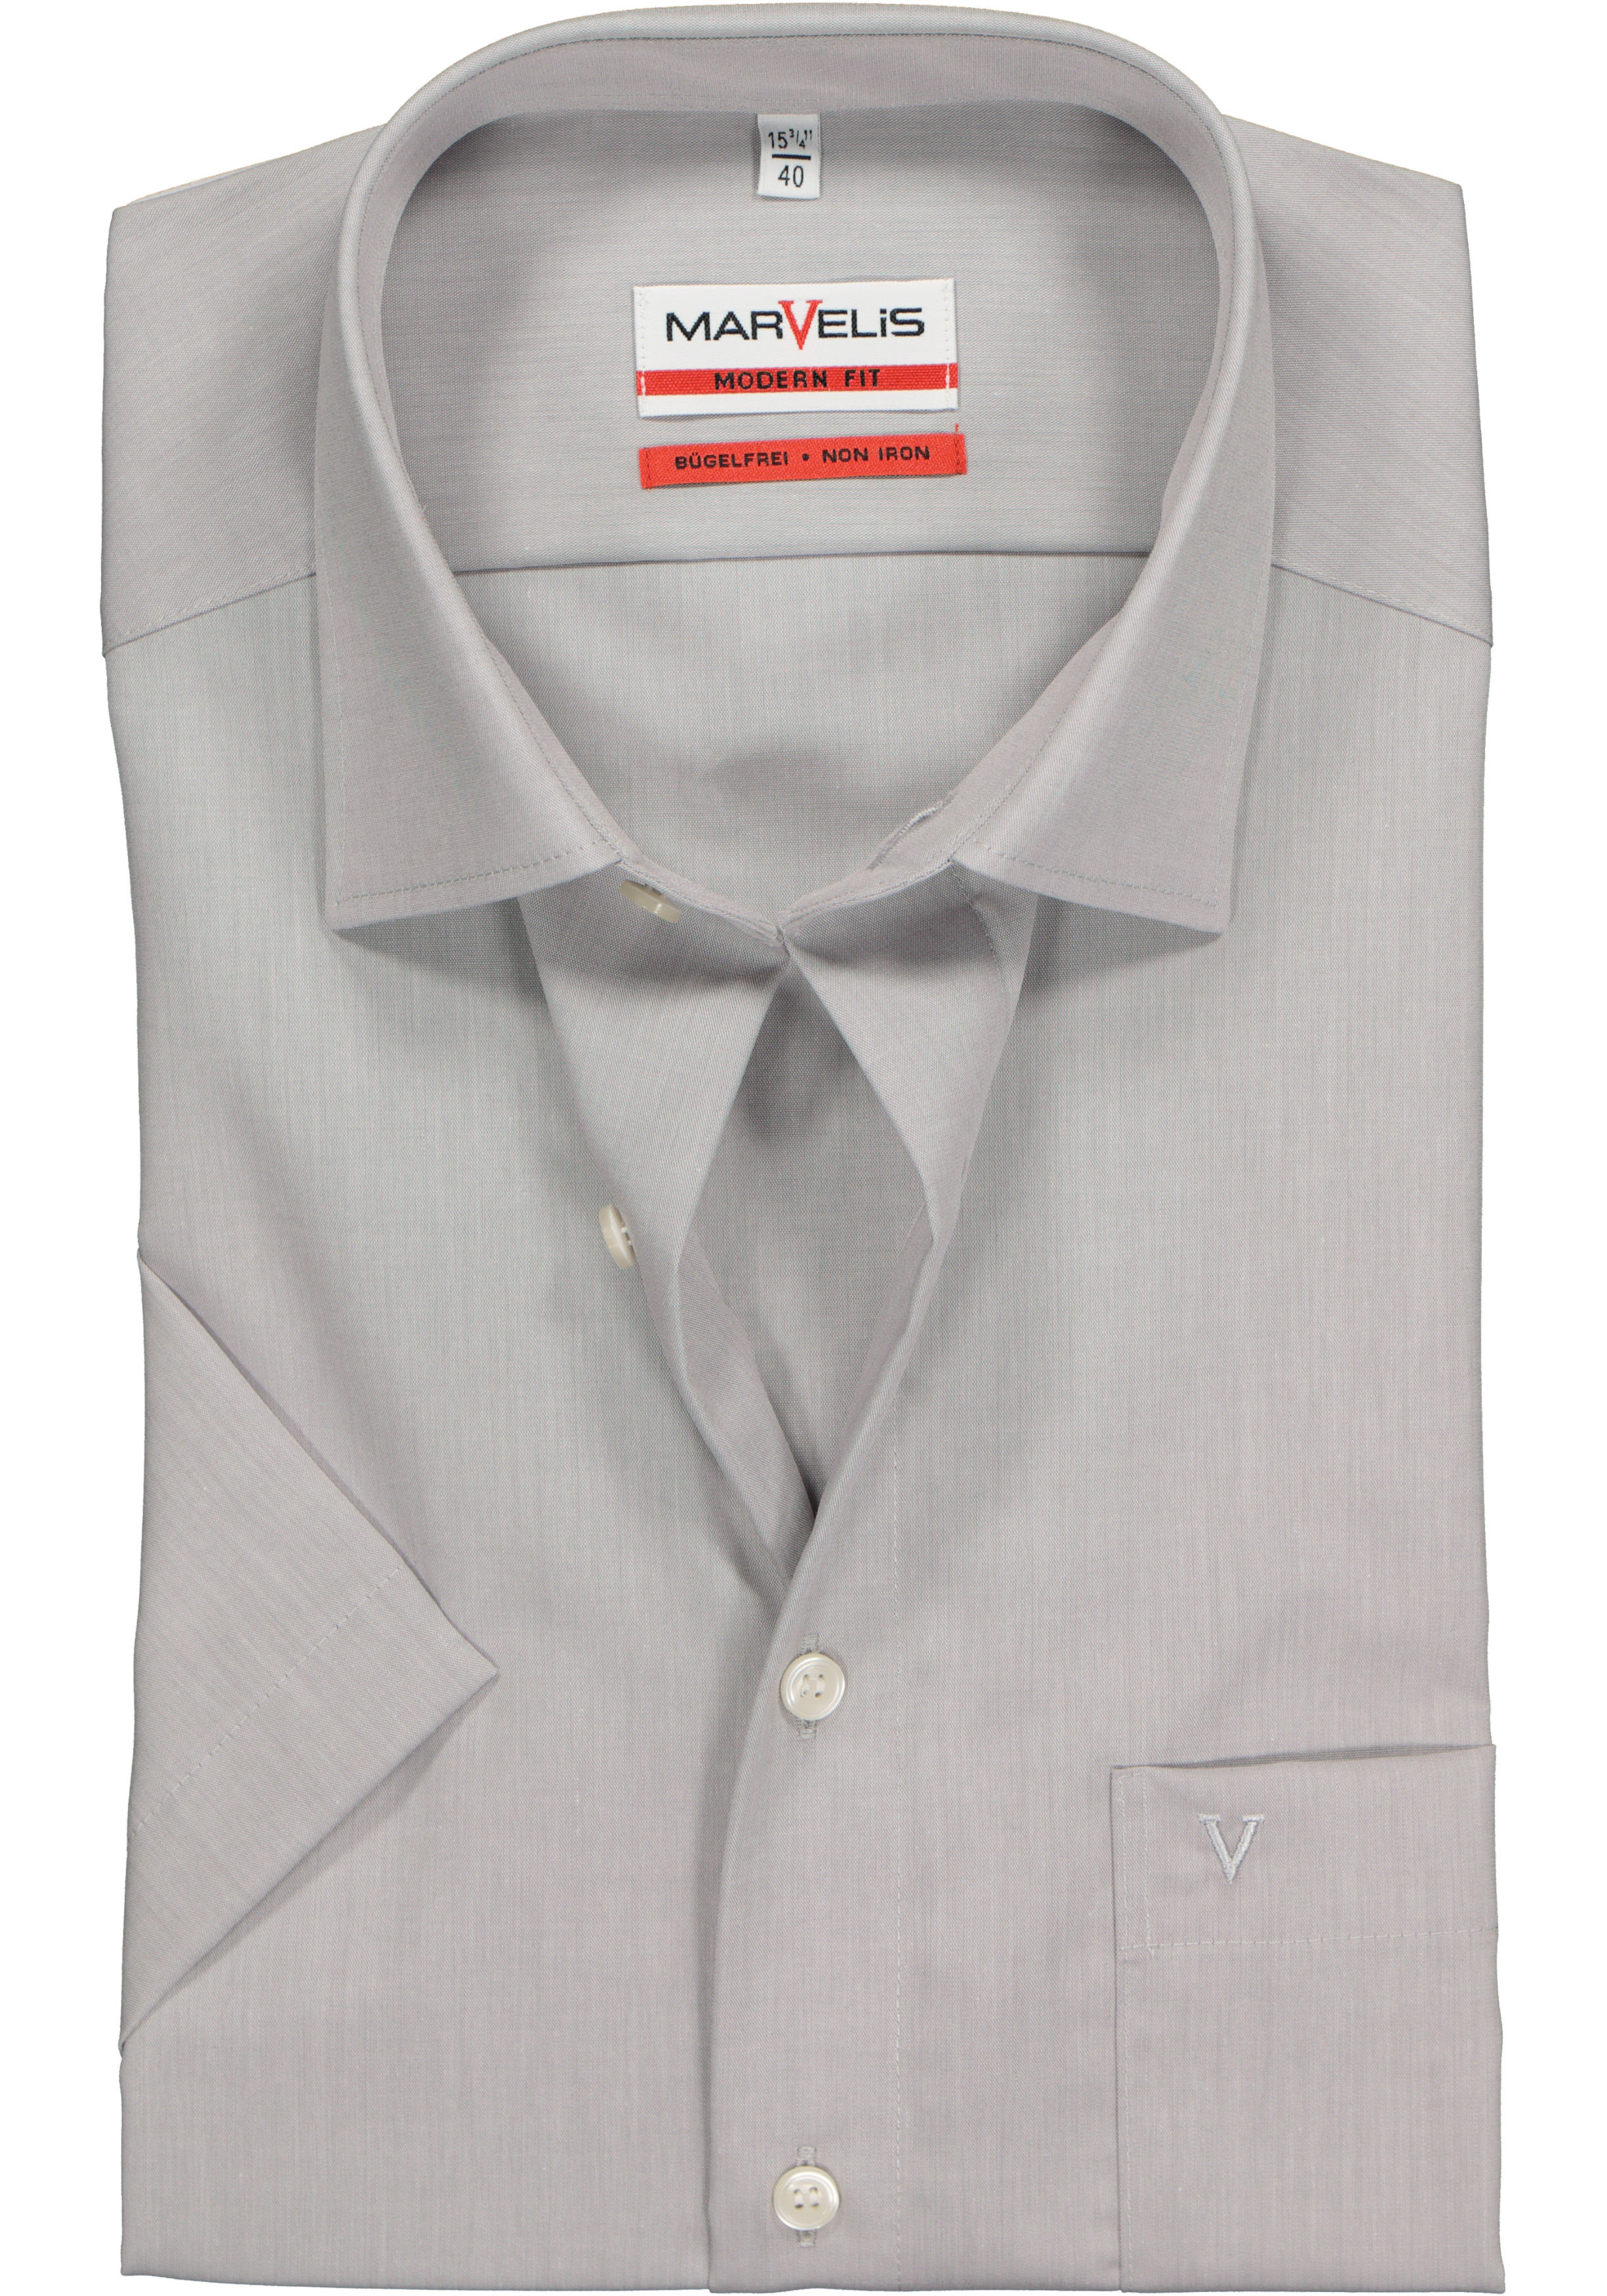 MARVELIS modern fit overhemd, korte mouw, grijs